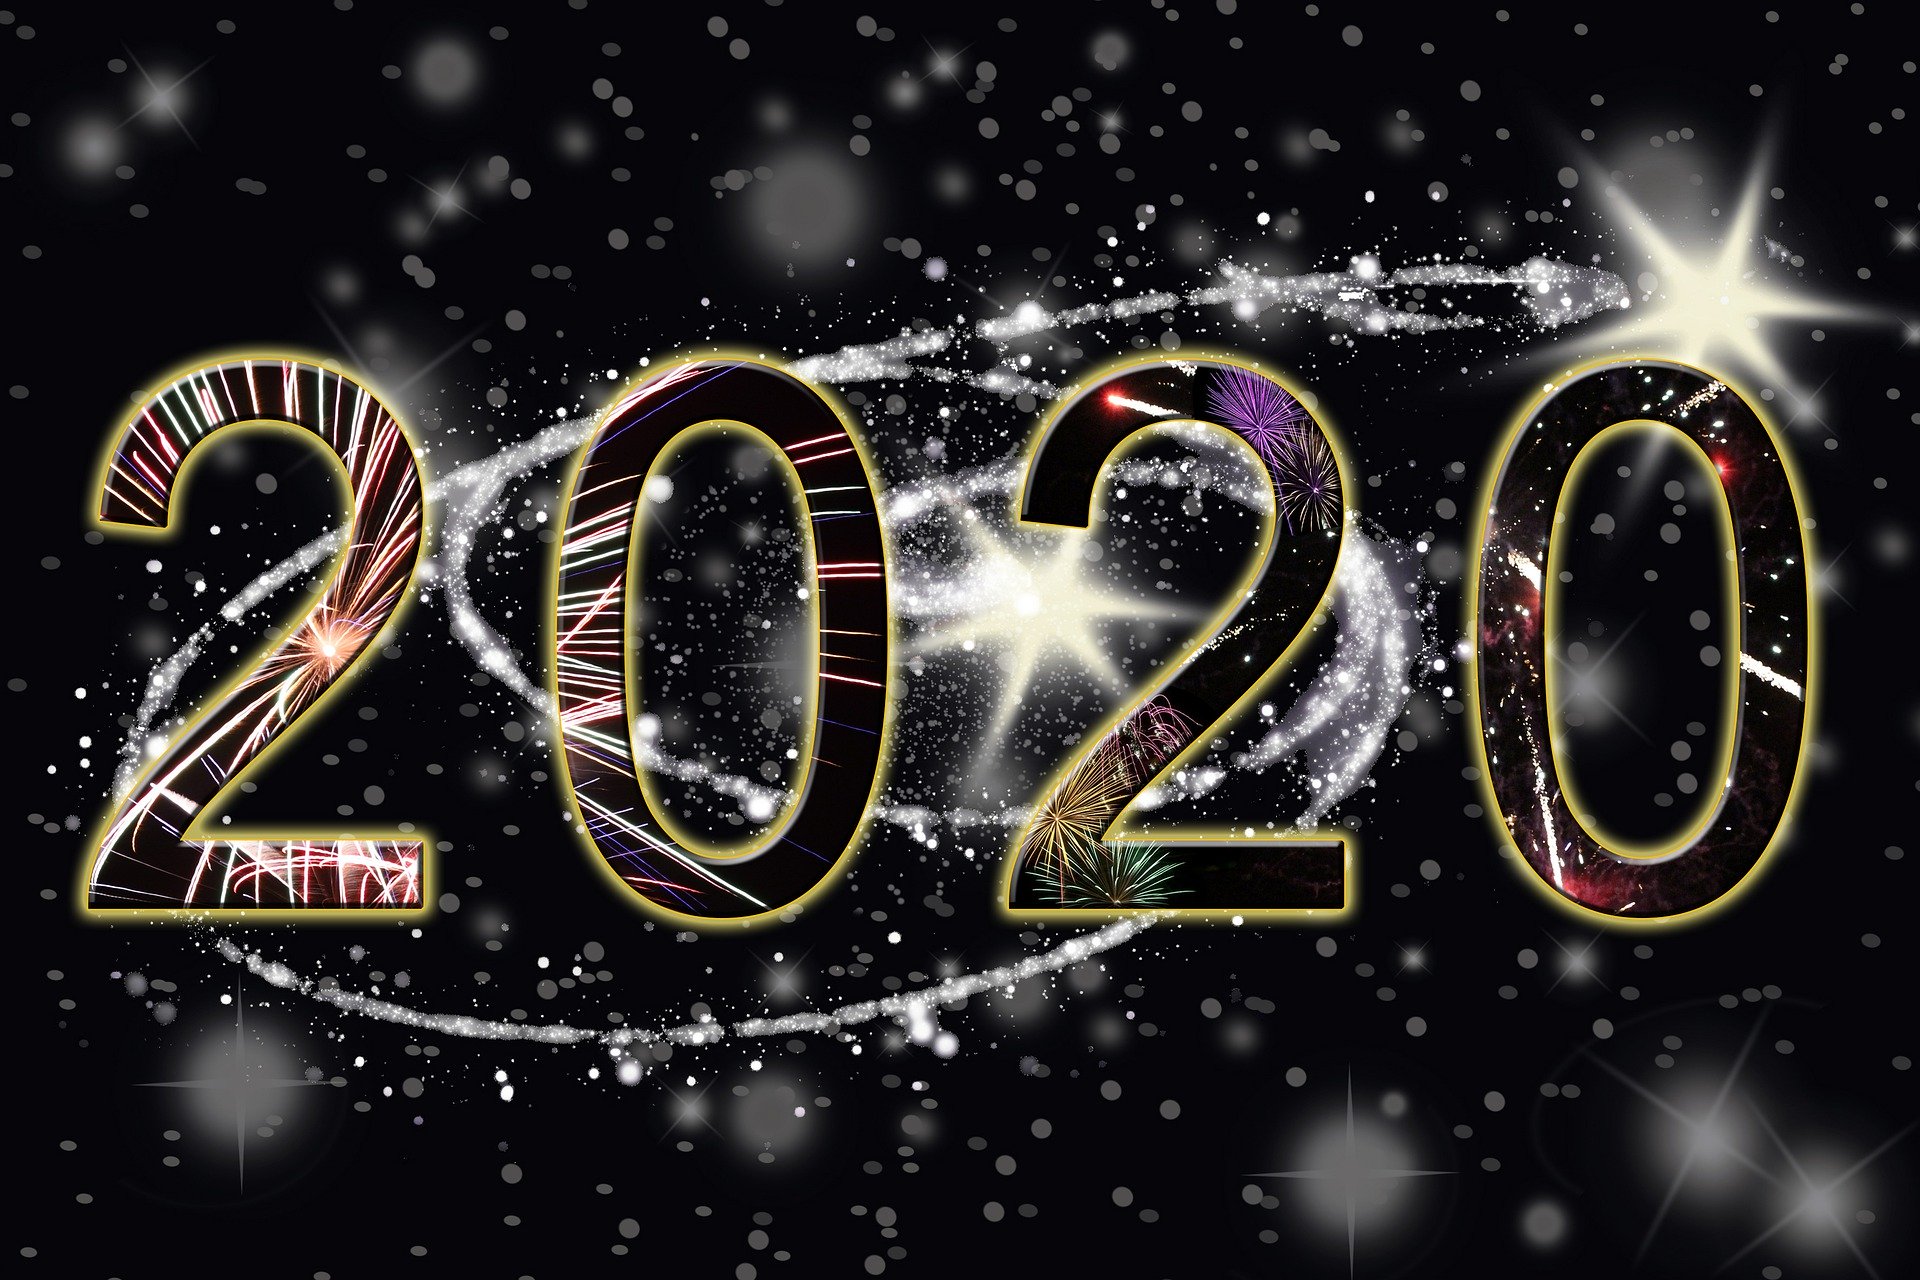 Cérémonie des vœux 2020